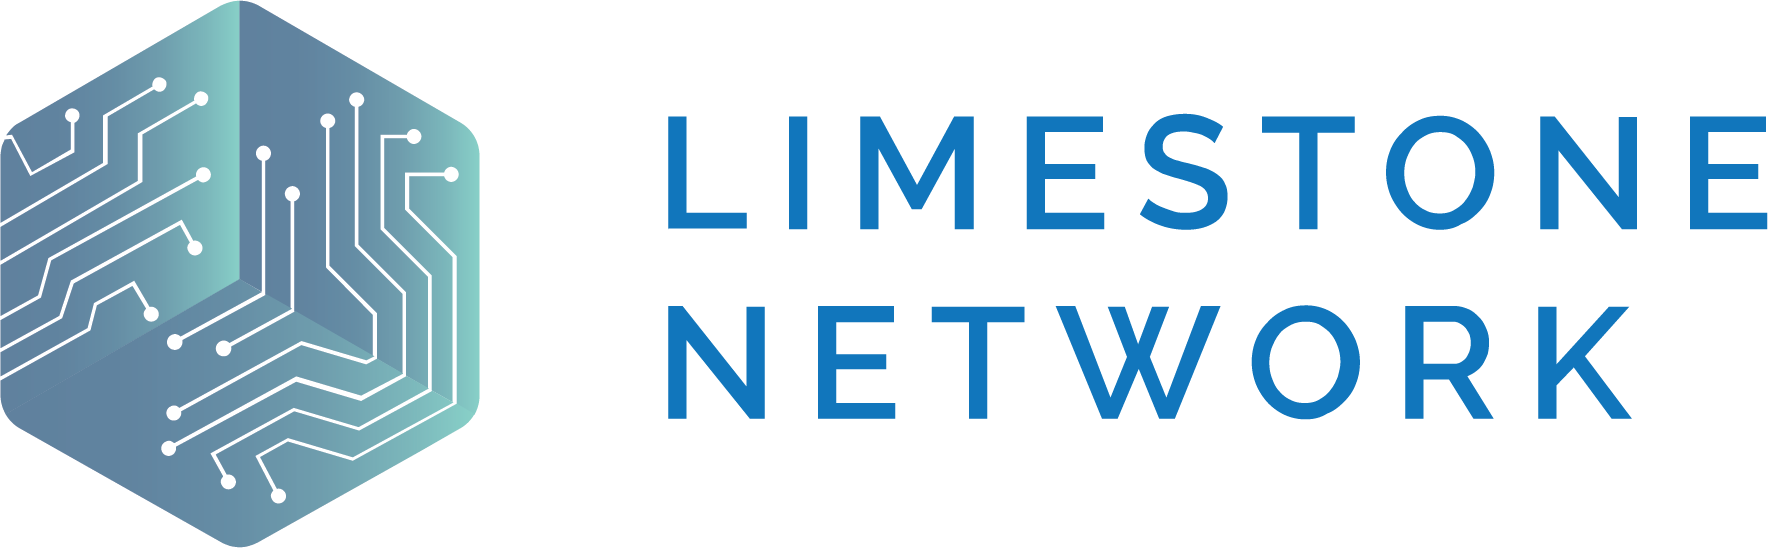 Limestone Network